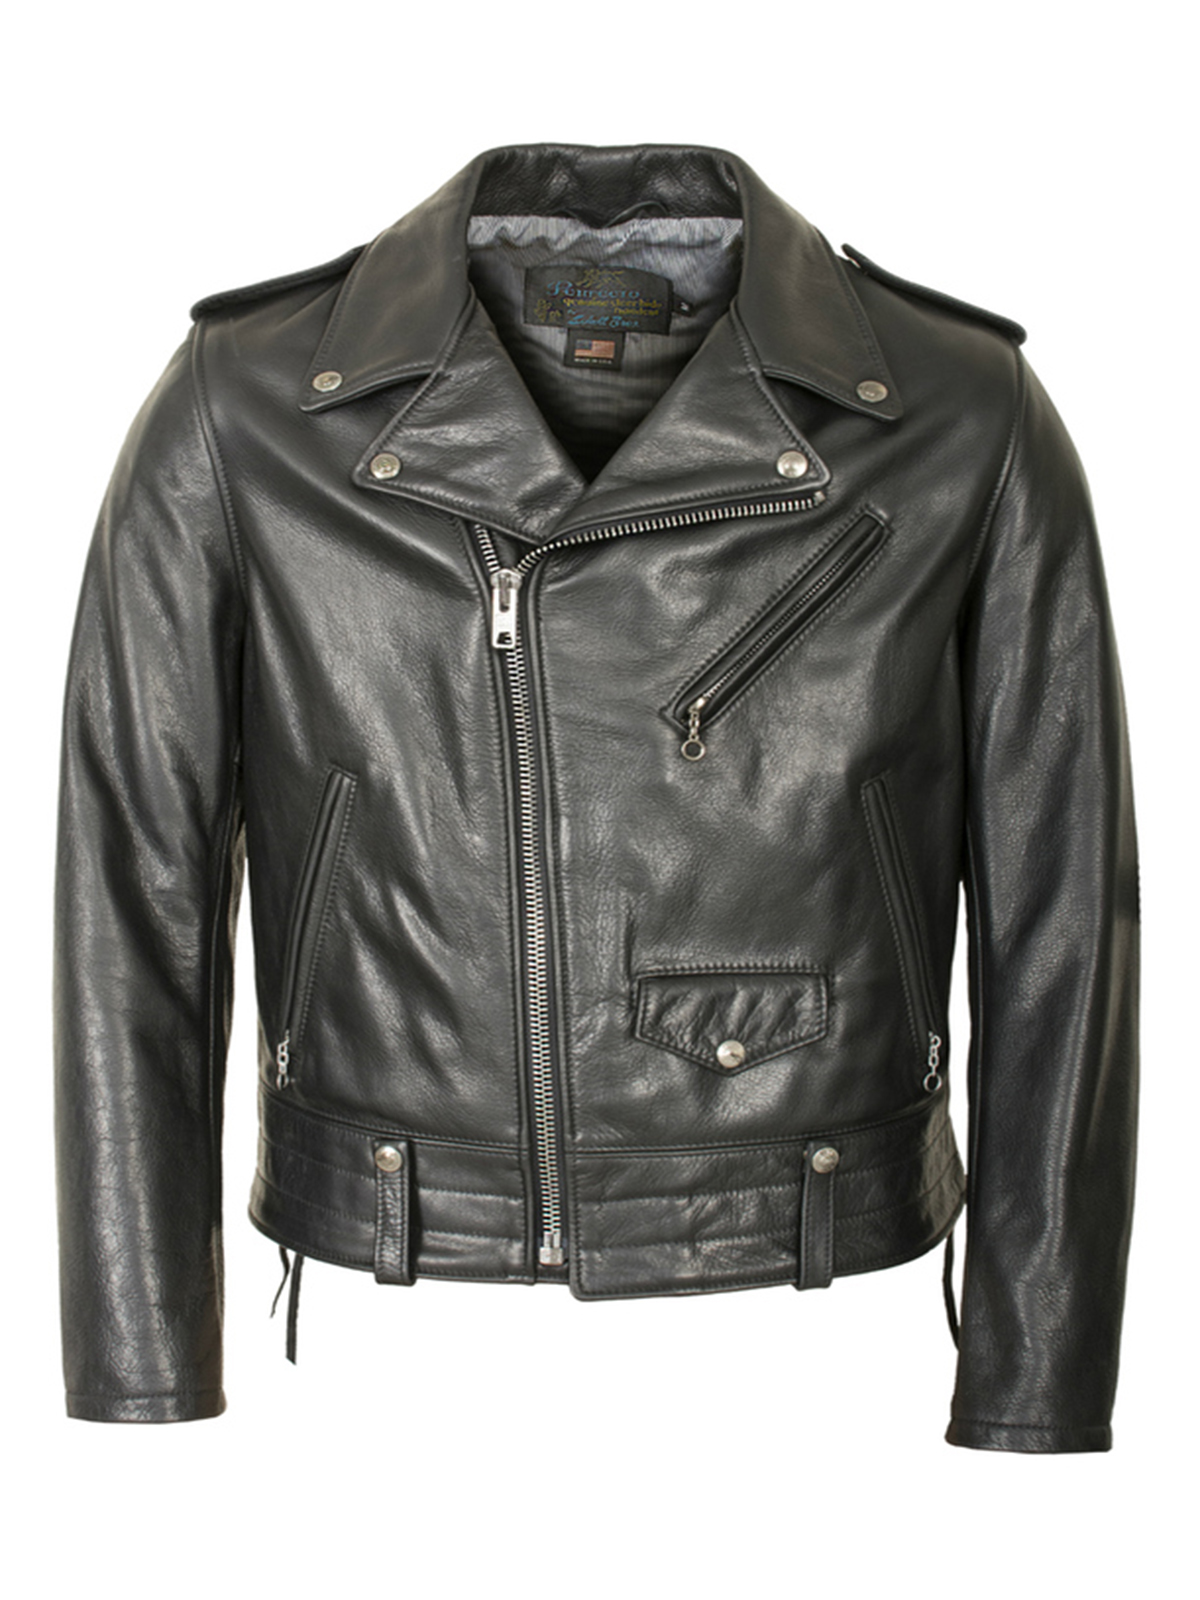 Used Schott Motorcycle Leather Jacket